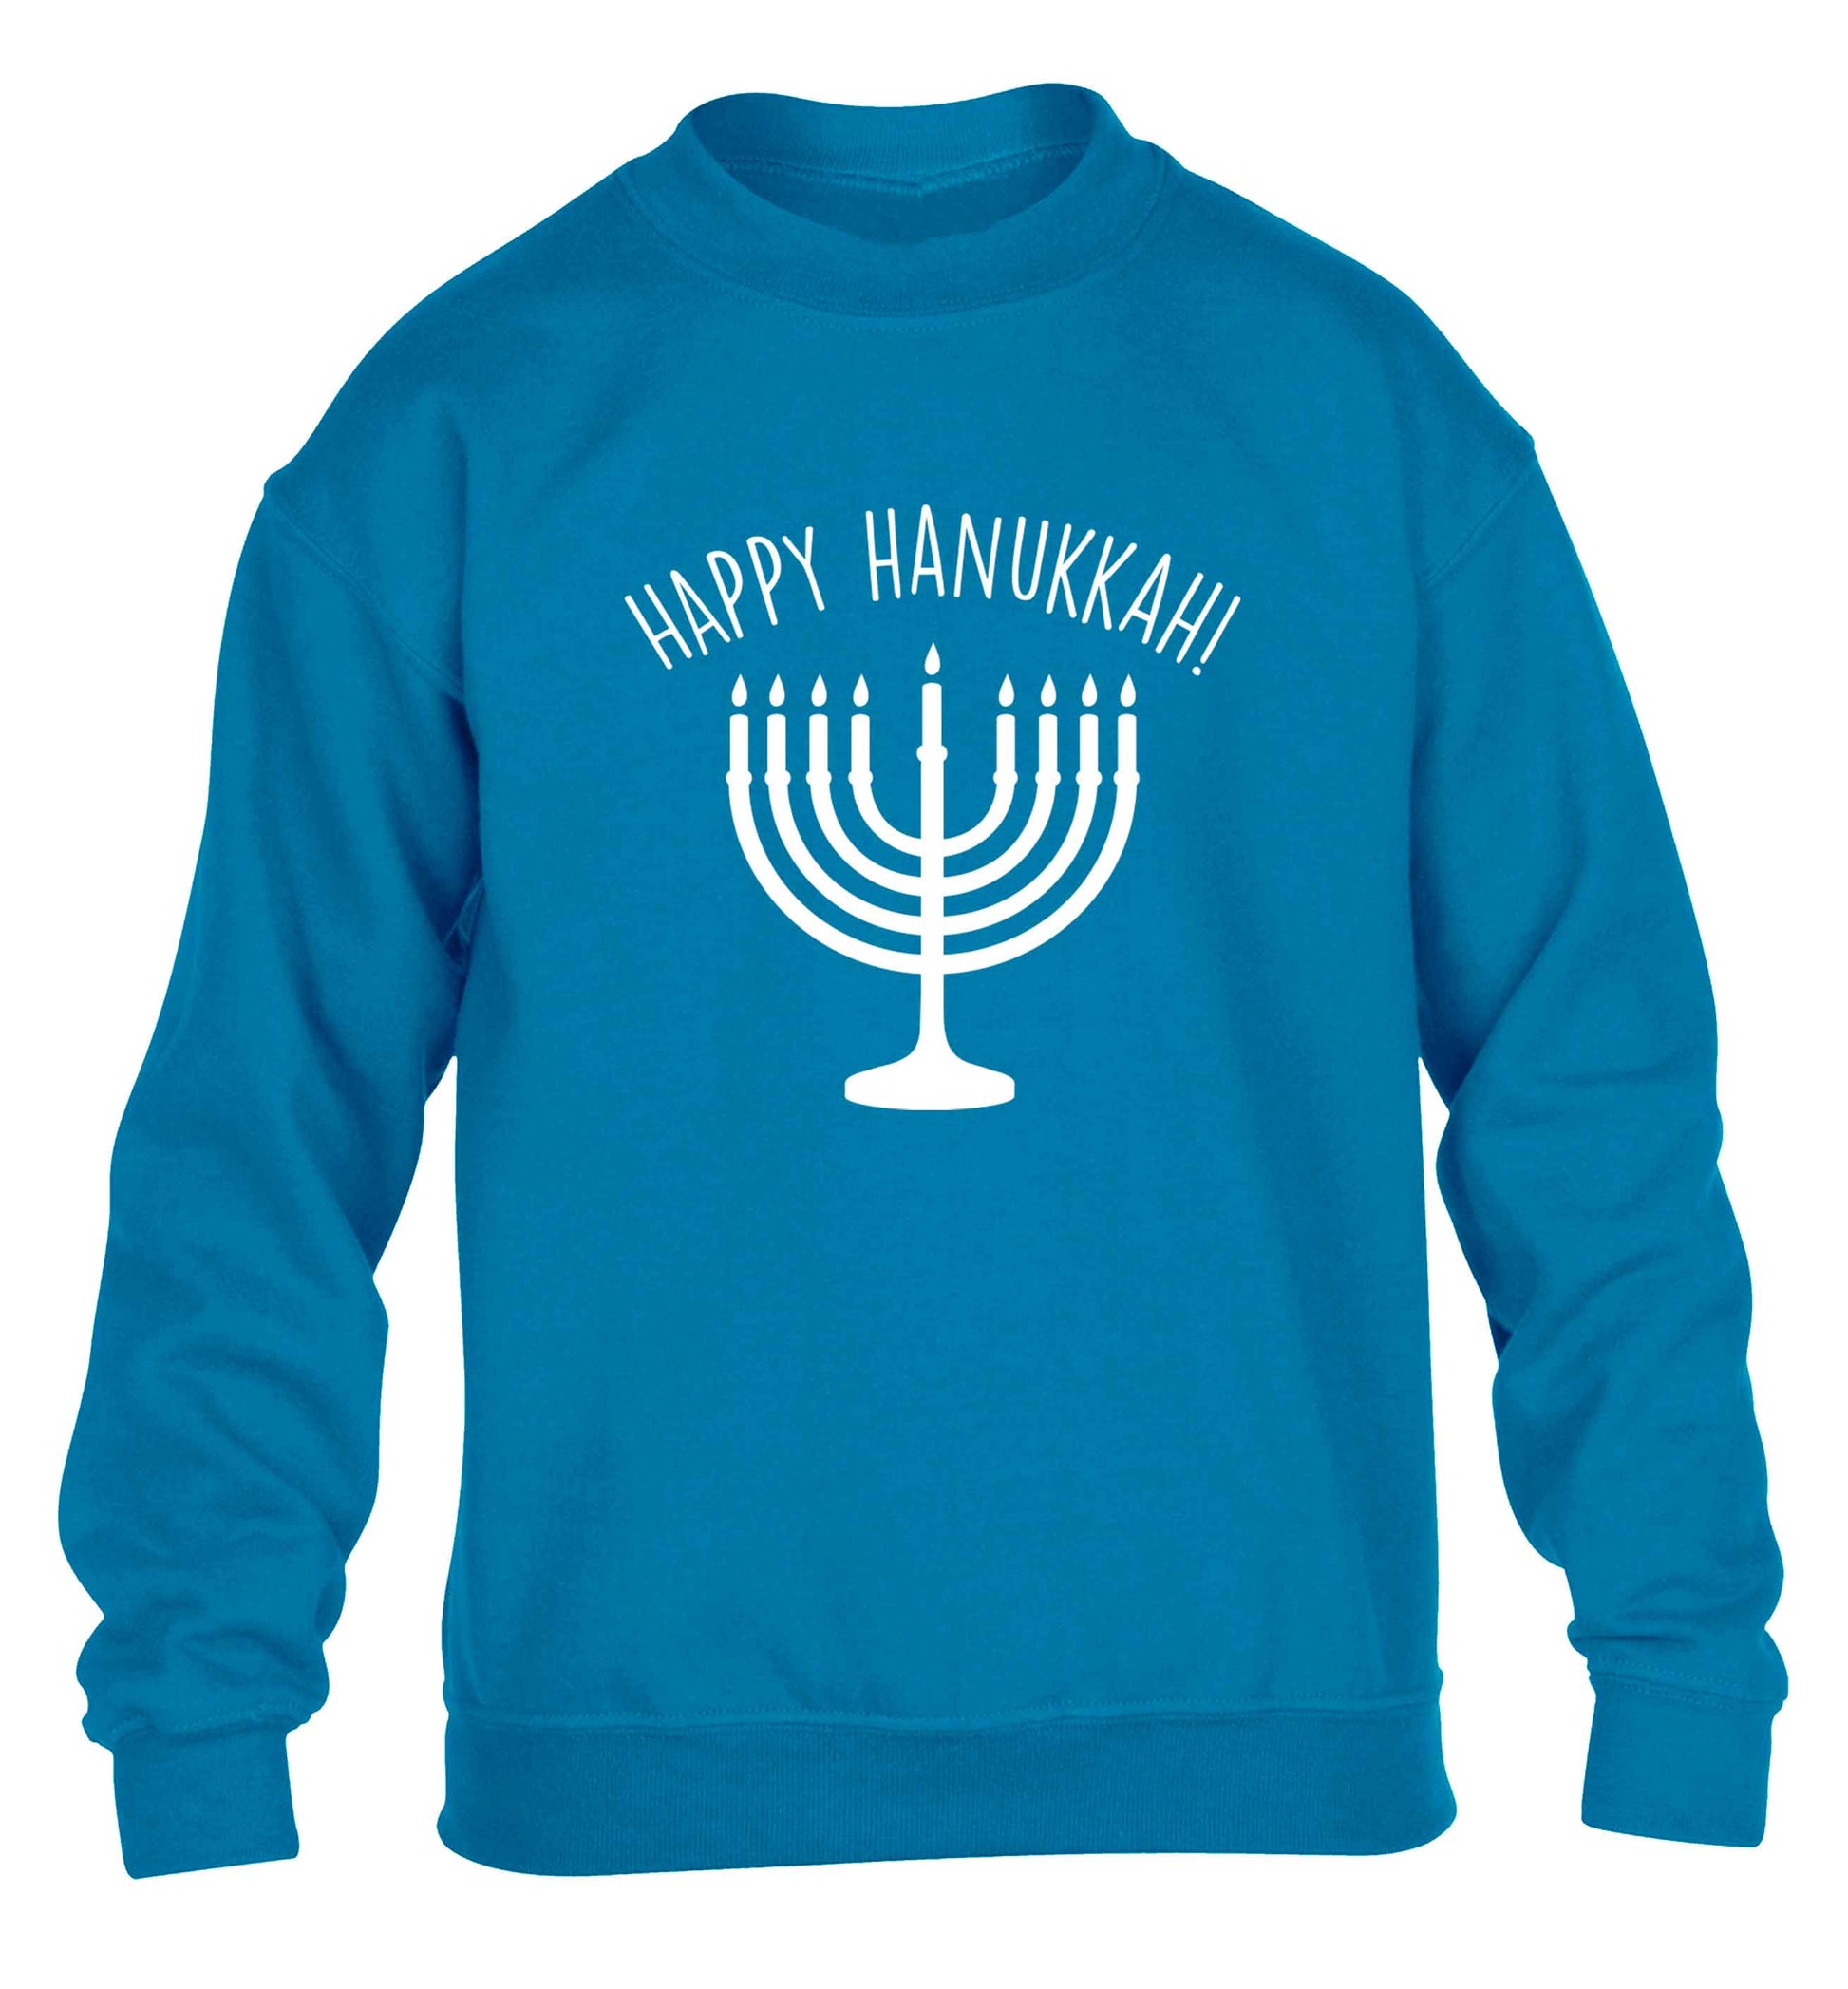 Happy hanukkah children's blue sweater 12-13 Years